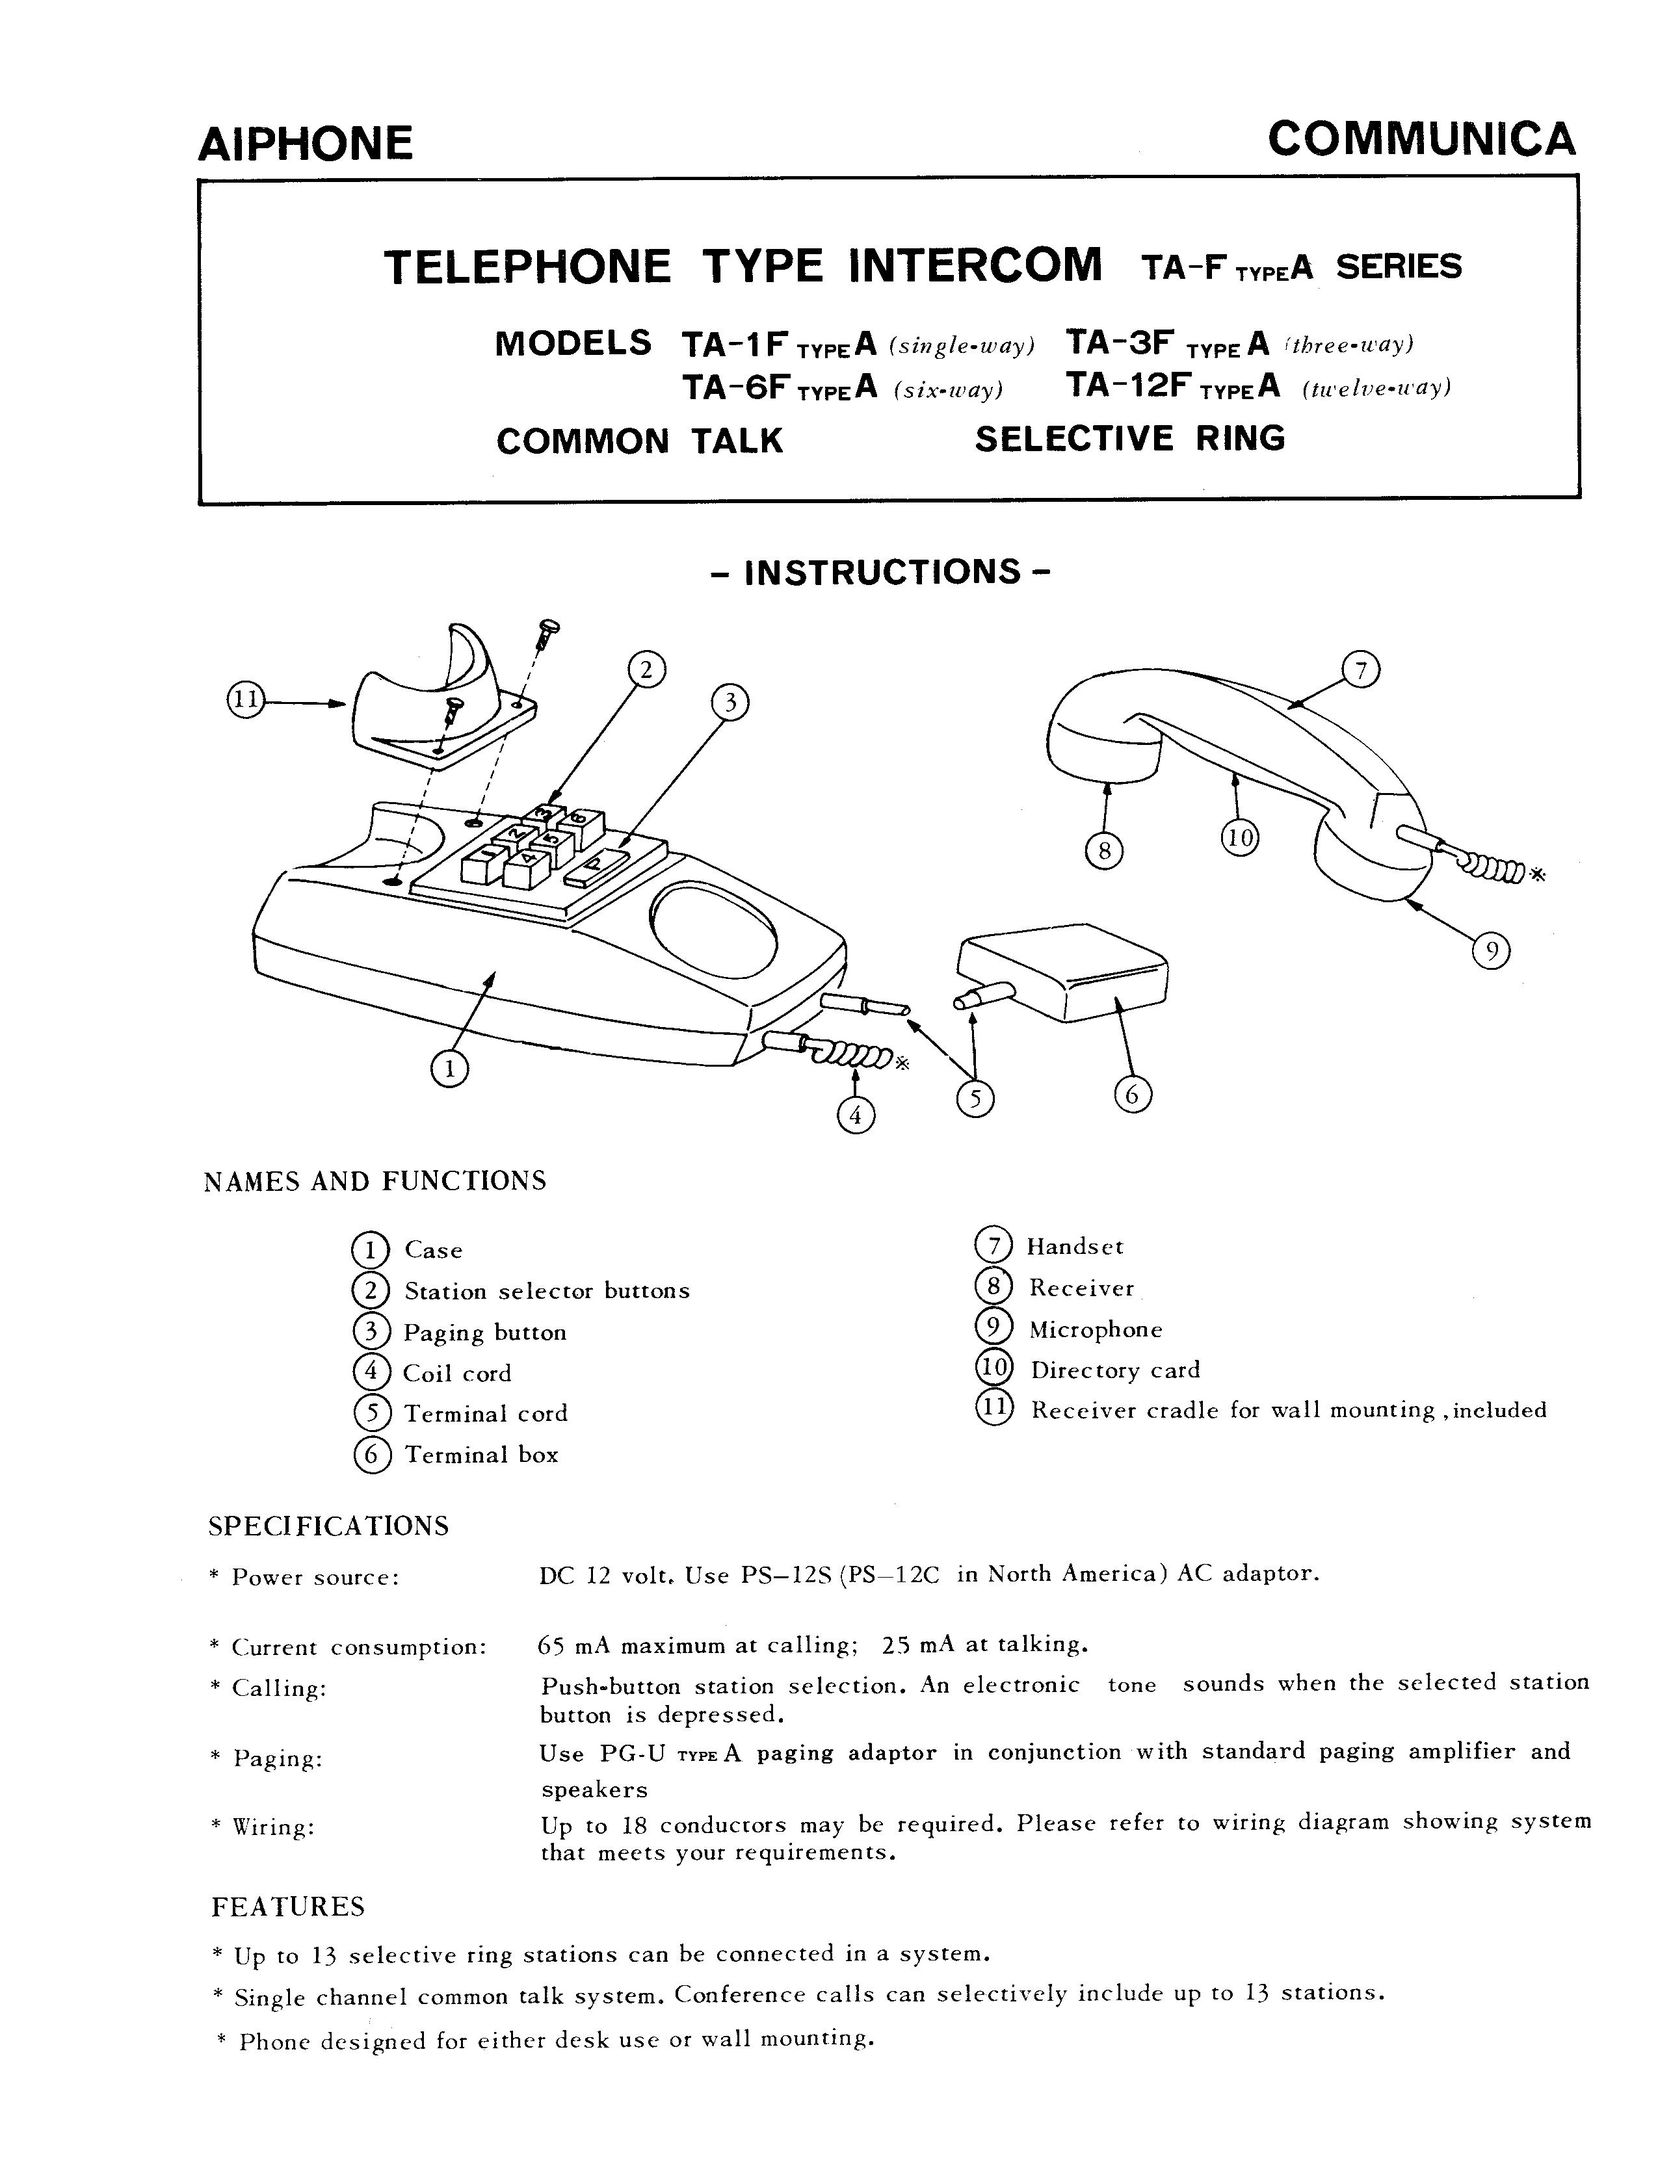 Aiphone TA-6F Telephone User Manual